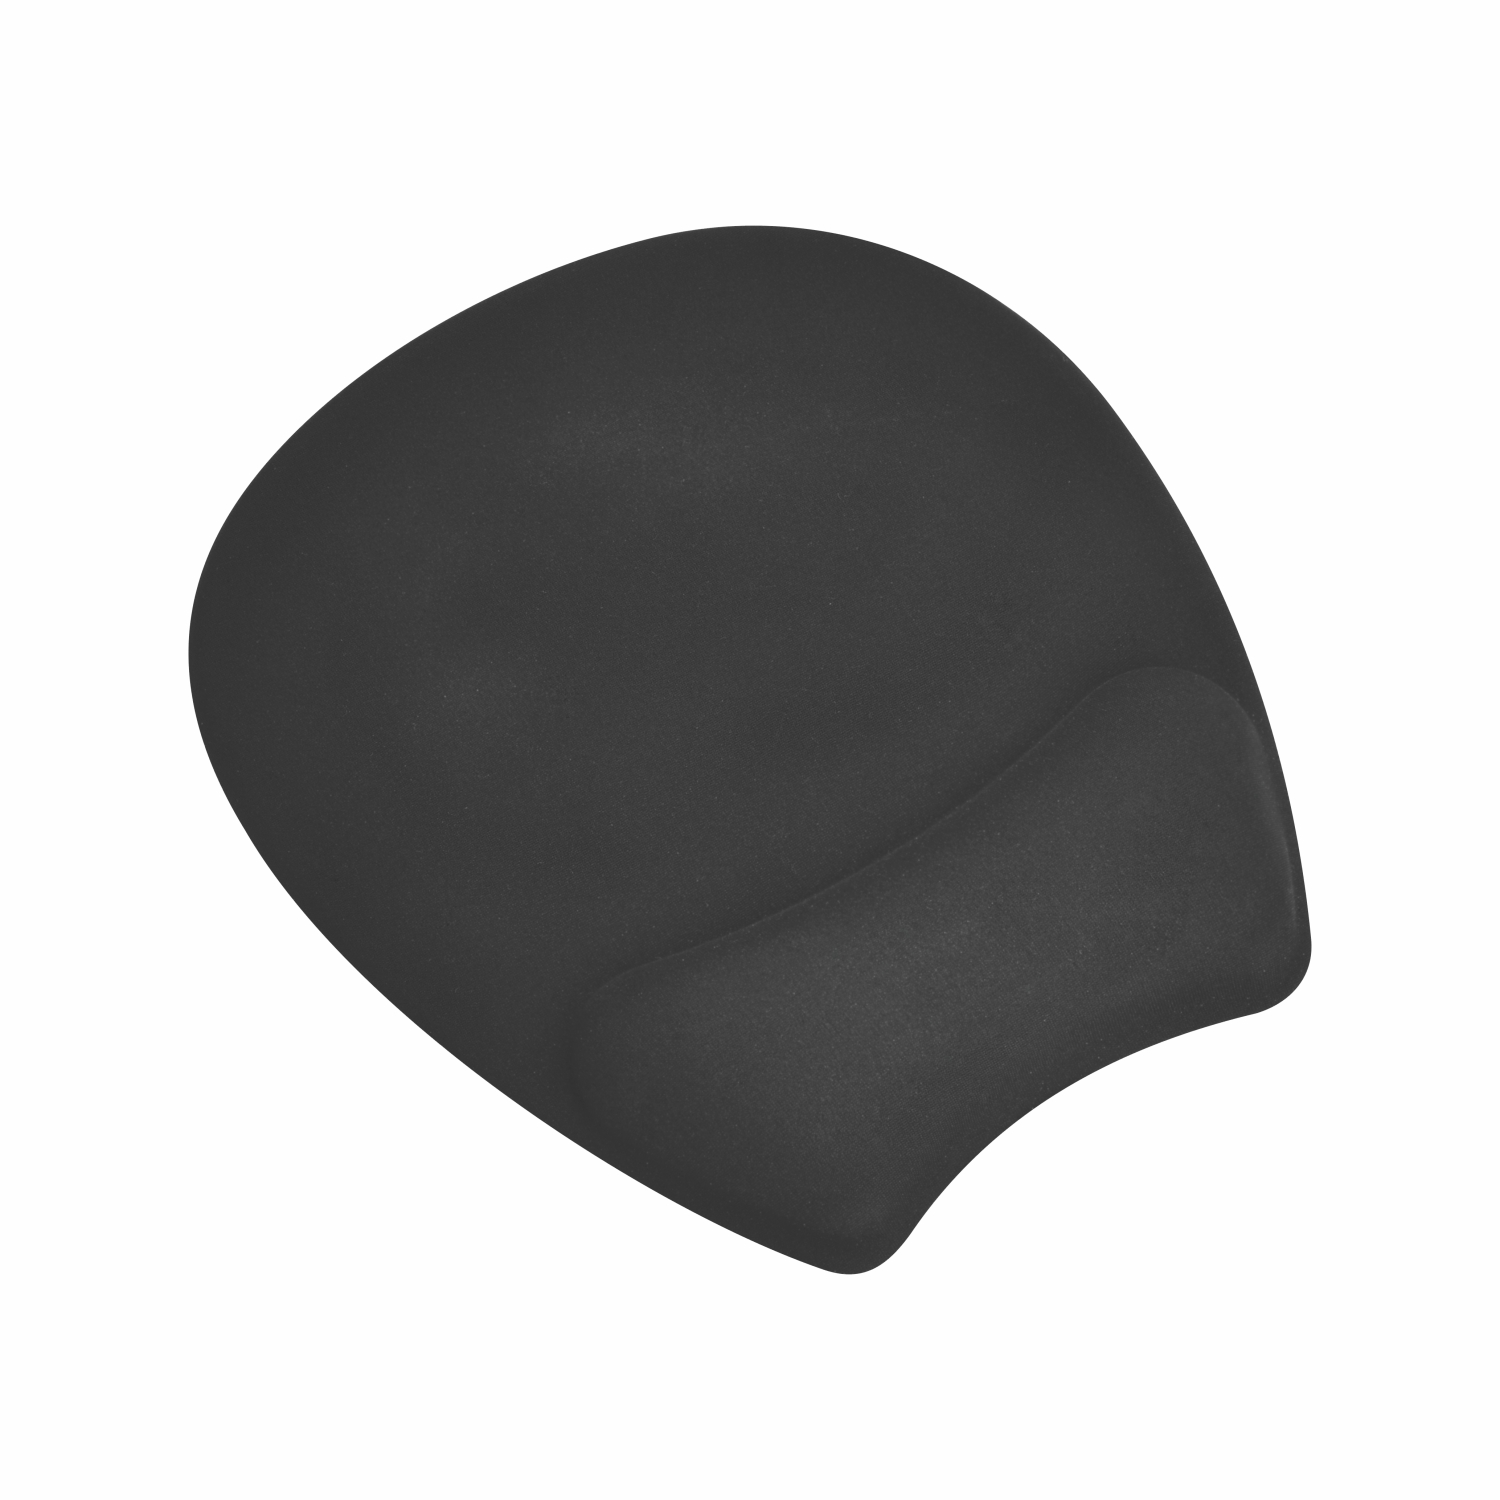 PALO Memory Foam Mousepad with Wrist Rest, Black